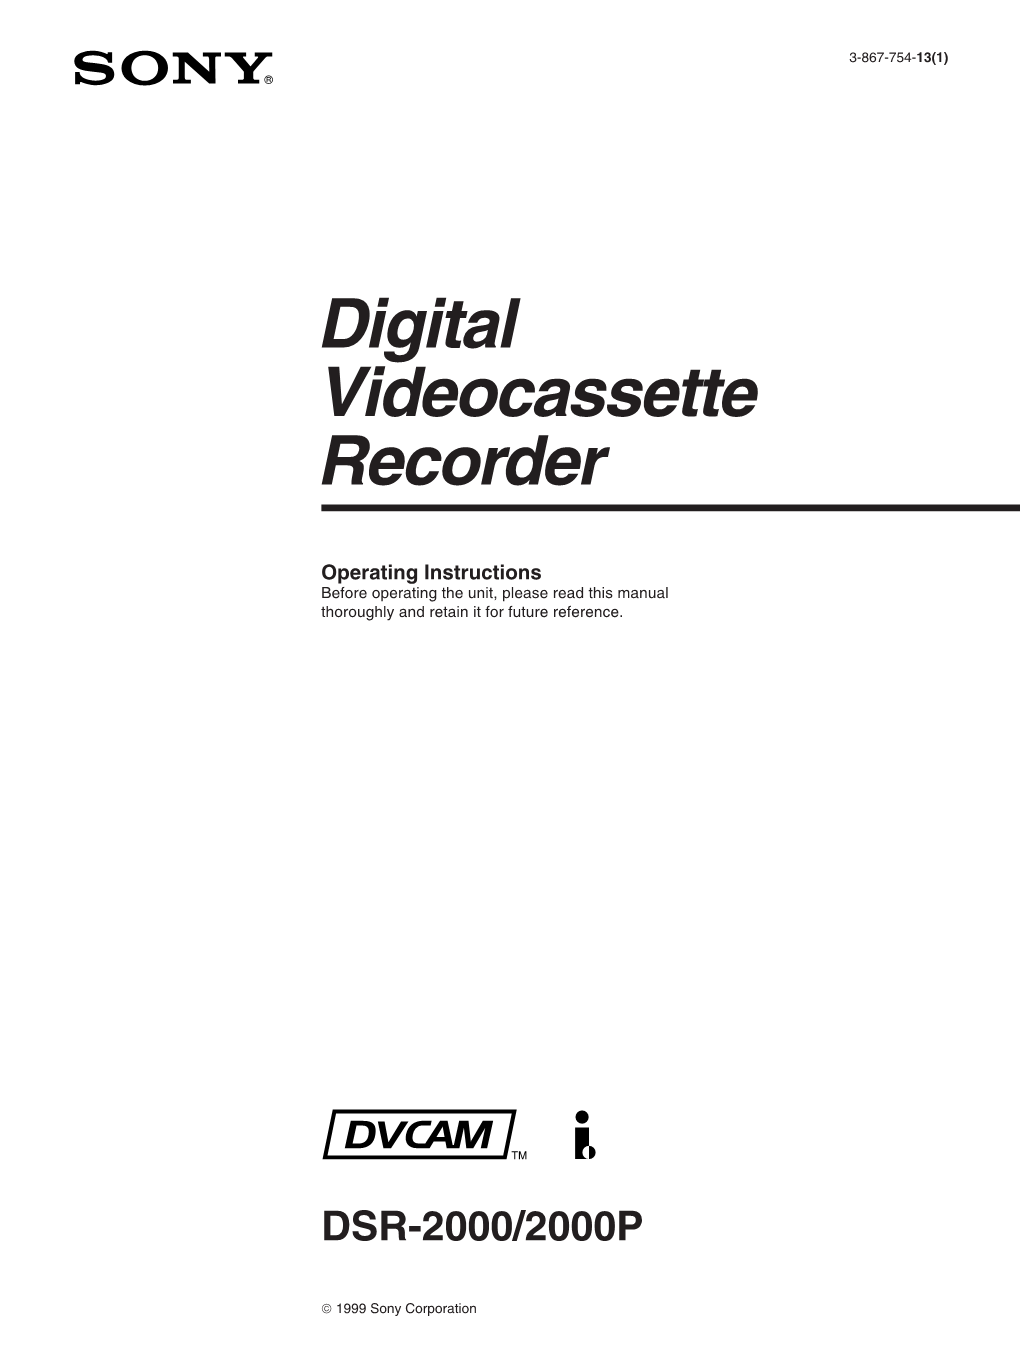 Digital Videocassette Recorder